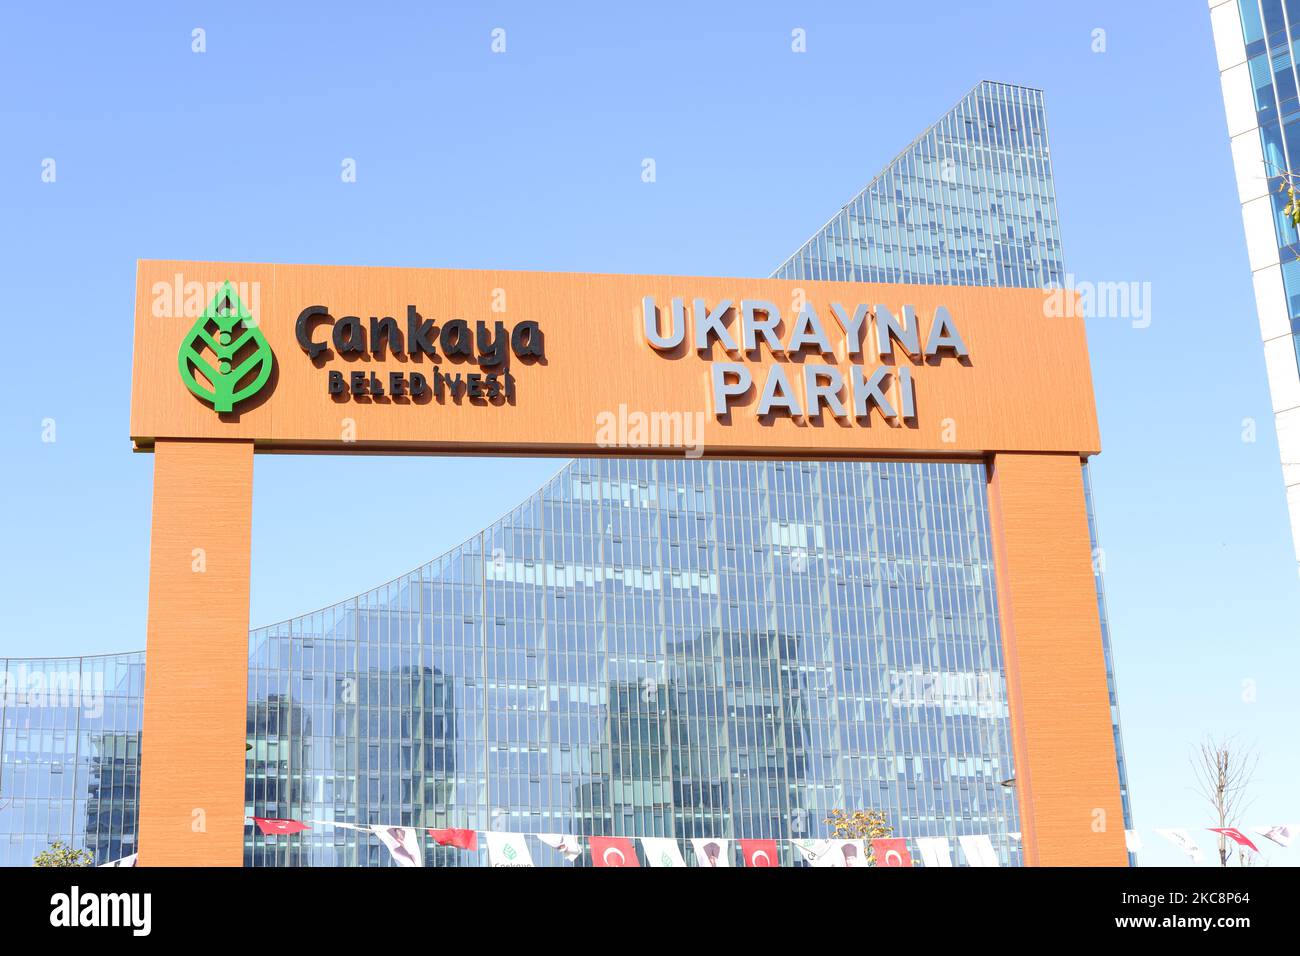 Entrance of park dedicated to Ukraine 'Ukrayna Parki' in Cankaya Ankara Stock Photo